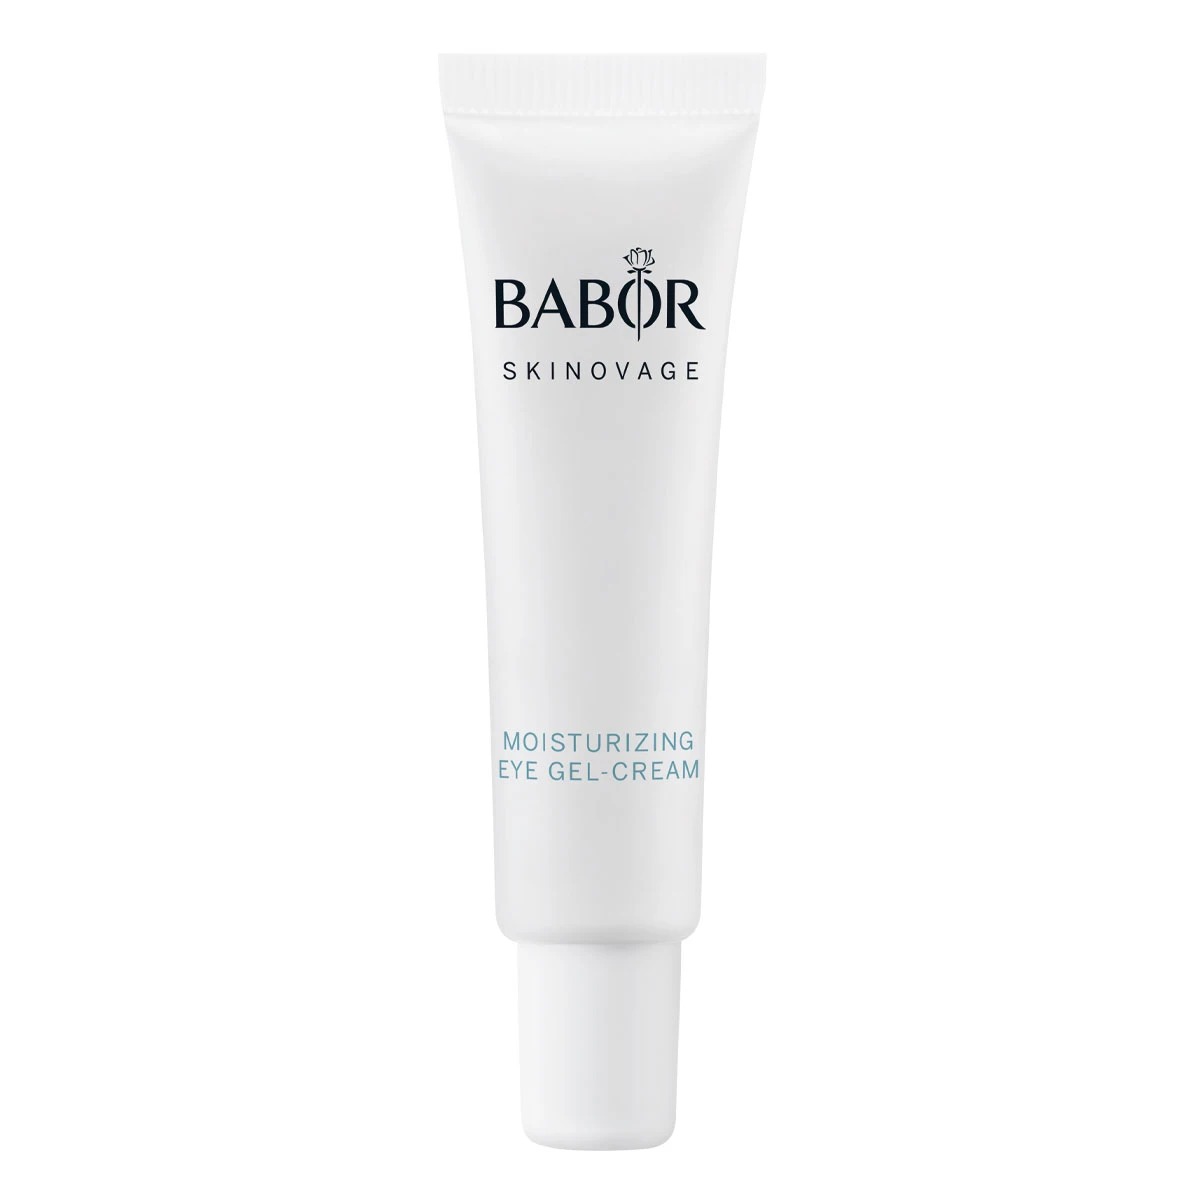 BABOR Skinovage Moisturizing Eye Gel-Cream 15ml - интернет-магазин профессиональной косметики Spadream, изображение 45041